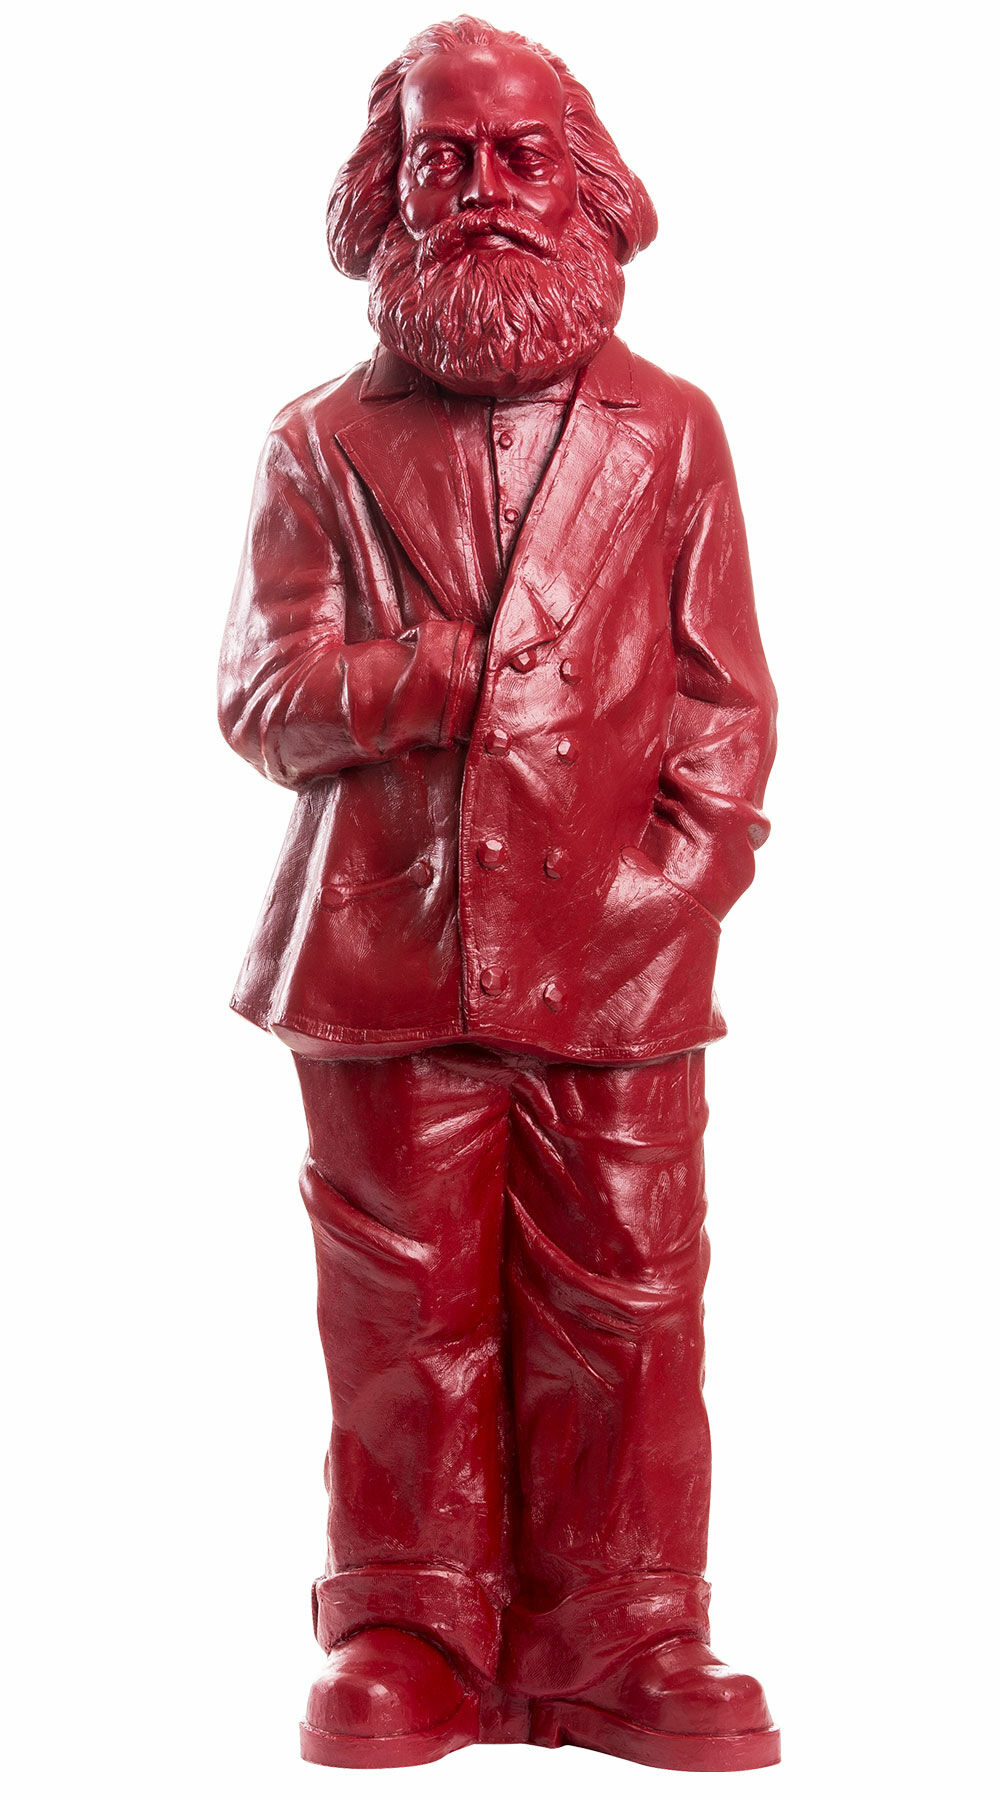 Skulptur "Karl Marx", version i lilla von Ottmar Hörl